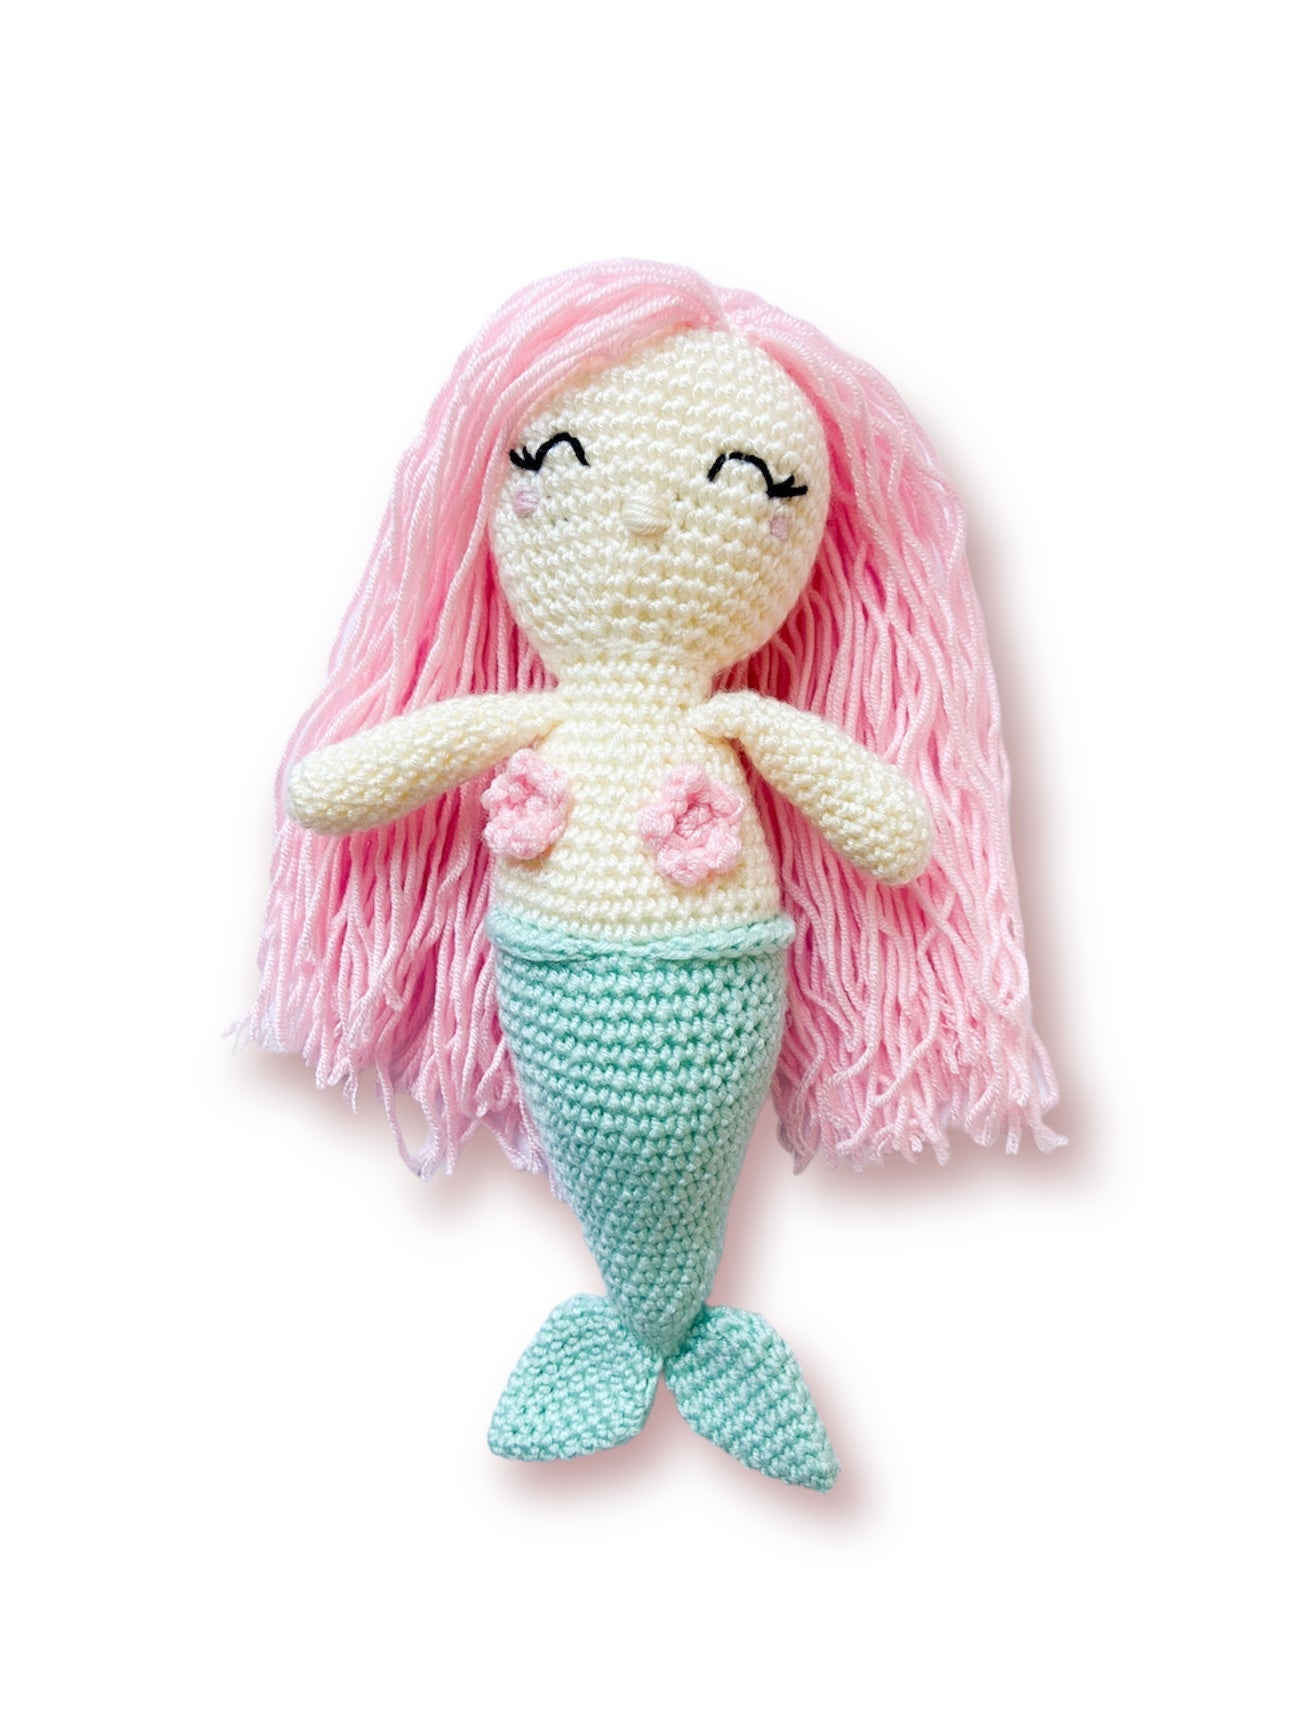 Mermaid Toy - triconuts